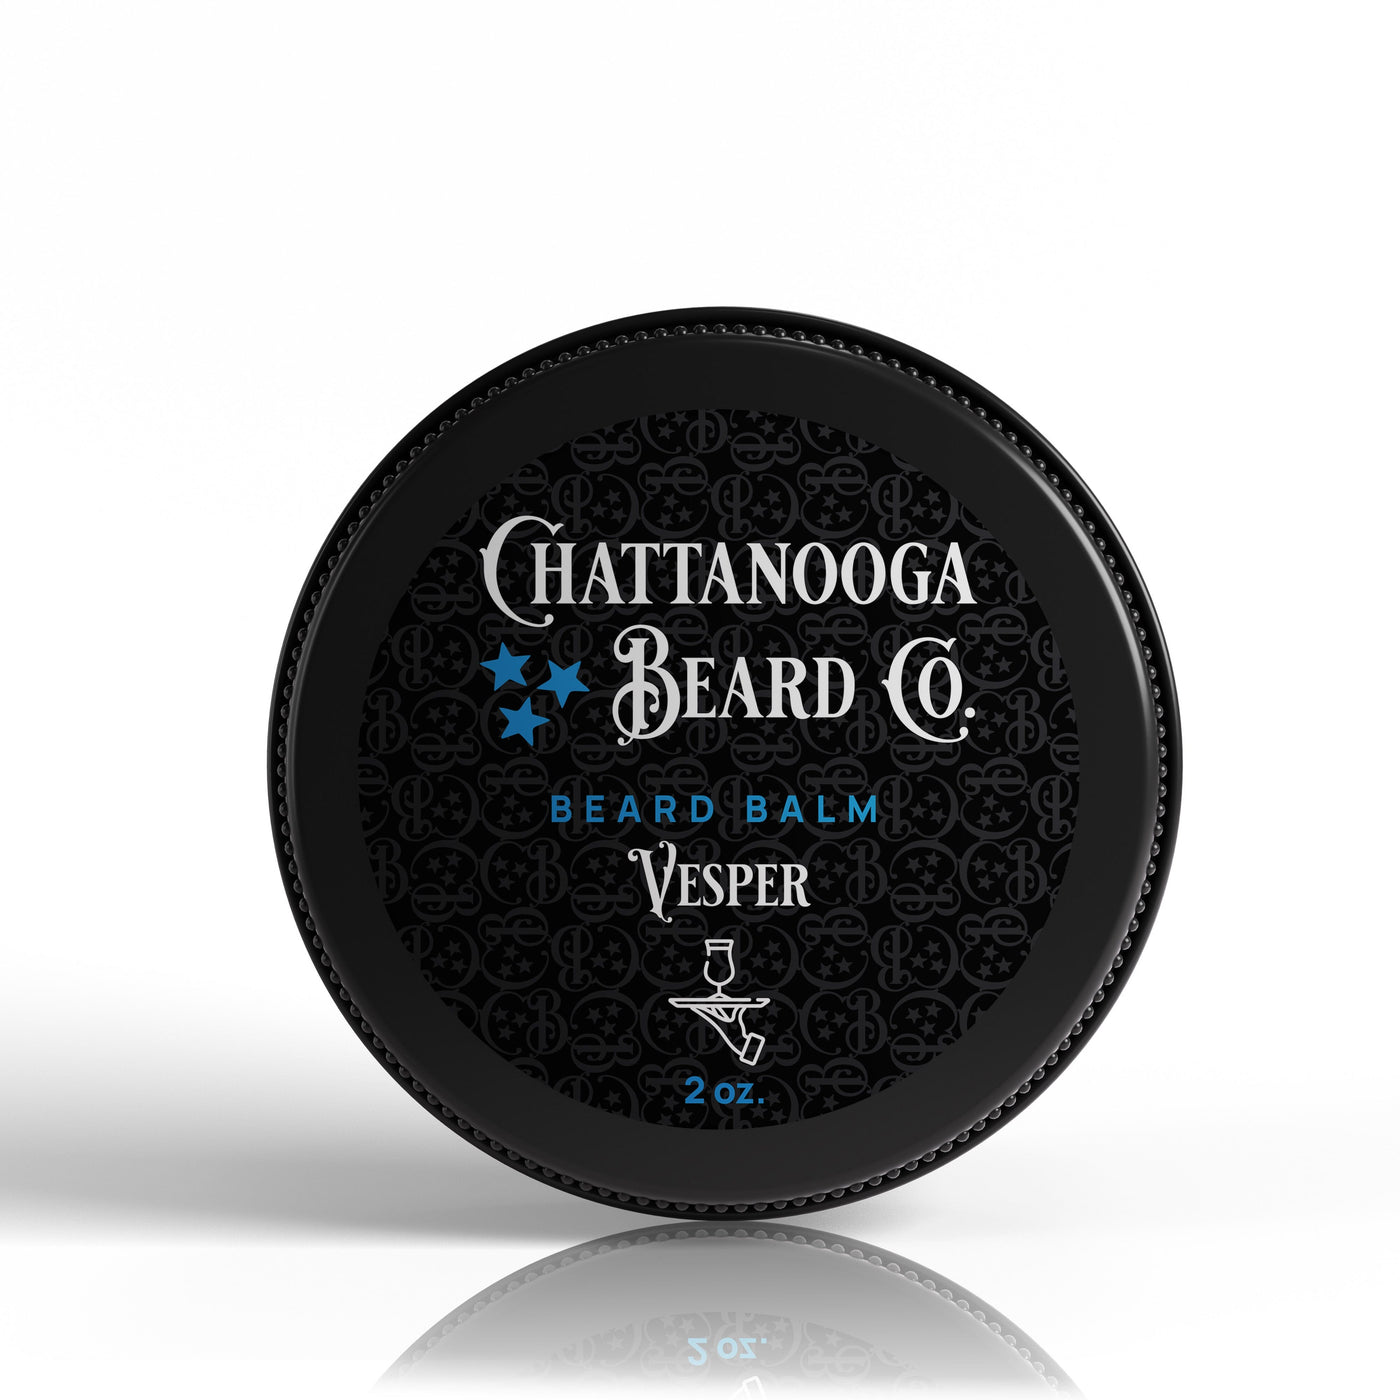 Chattanooga Beard Co. - Beard Balm Balm Chattanooga Beard Co. Vesper 